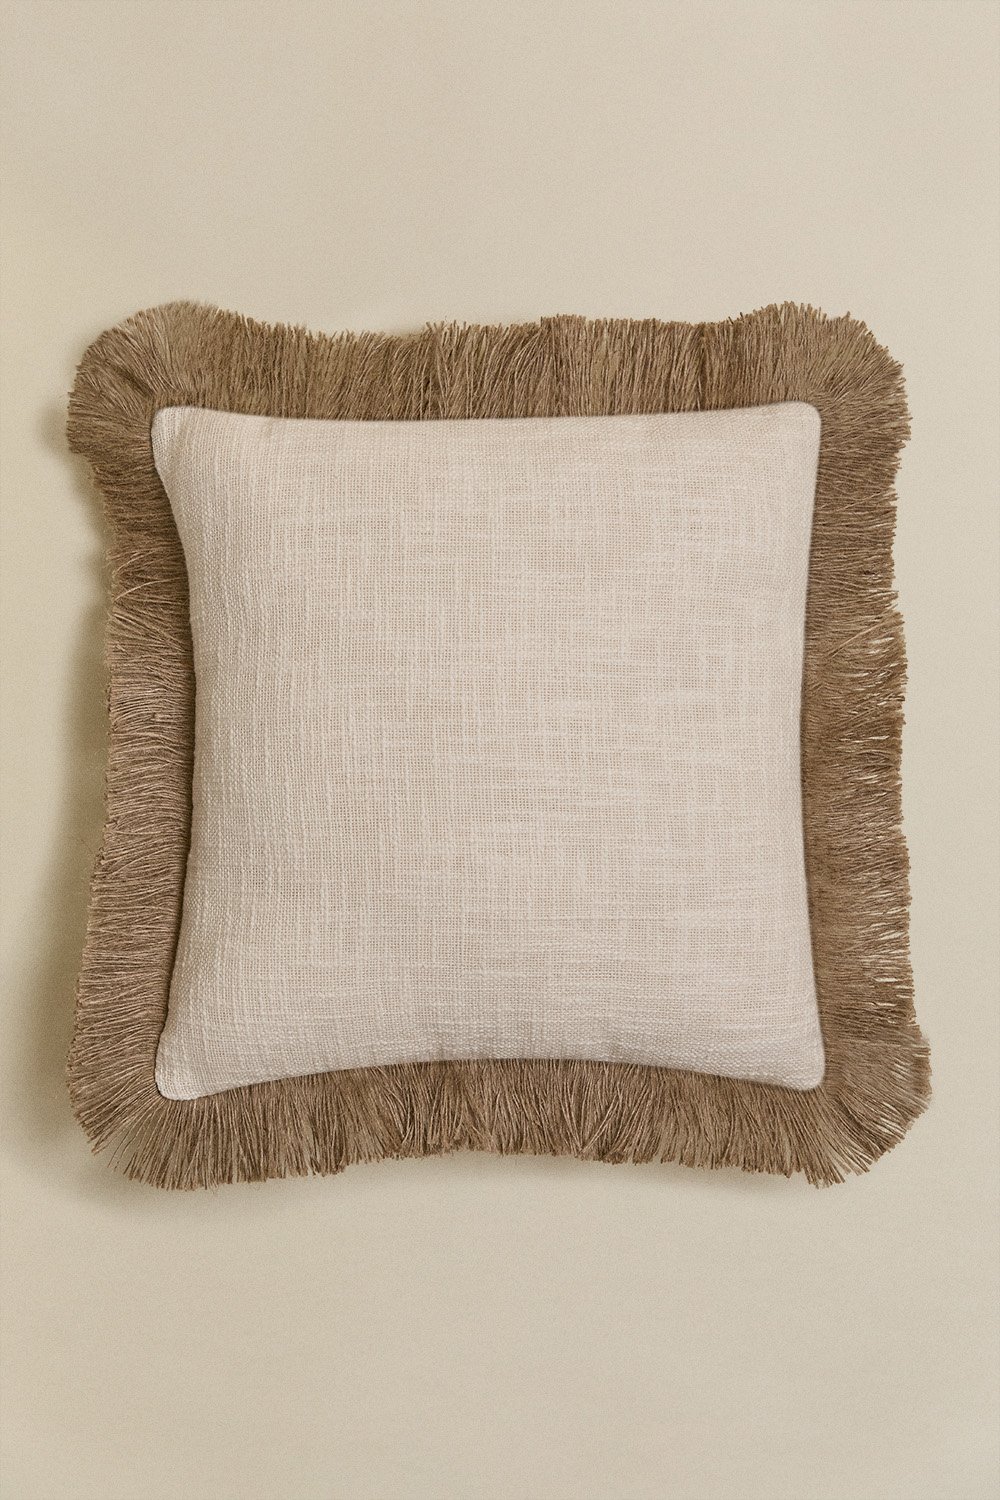 Square cotton cushion (45x45 cm) Paraiba, gallery image 2